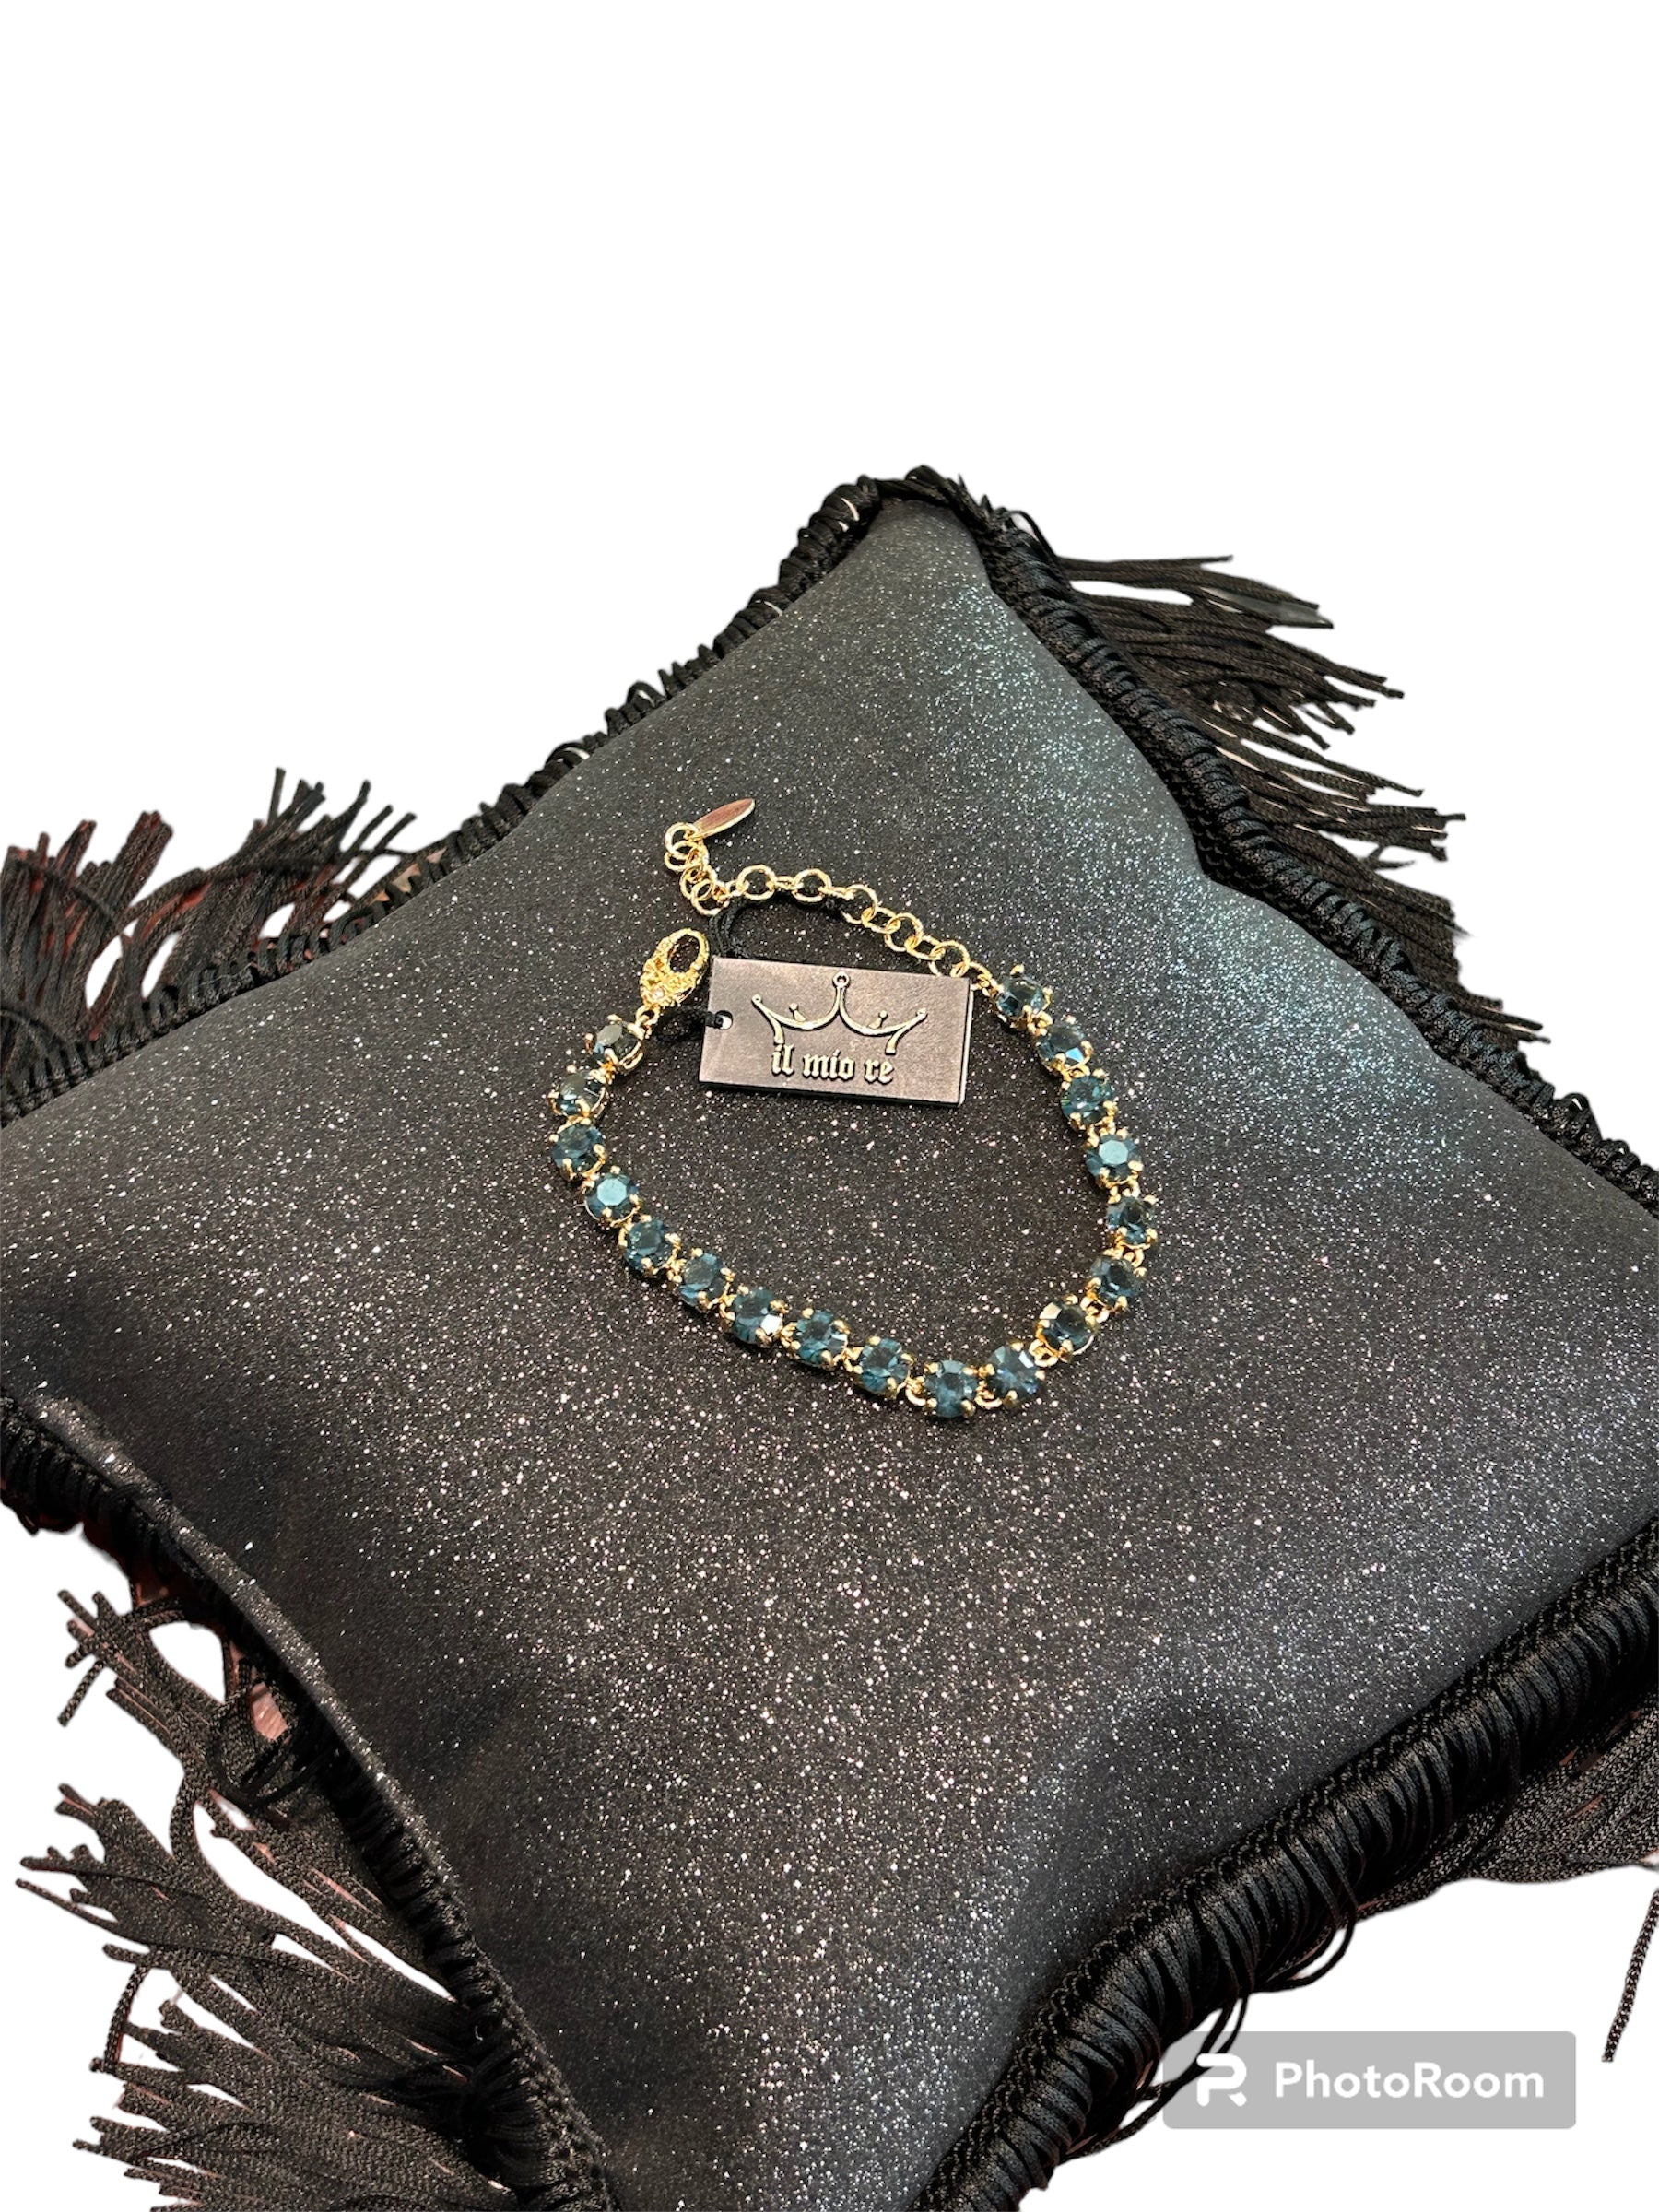 IL Mio Re - Bracelet with blue sapphires in gilded bronze - ILMIORE BR 020 GZ